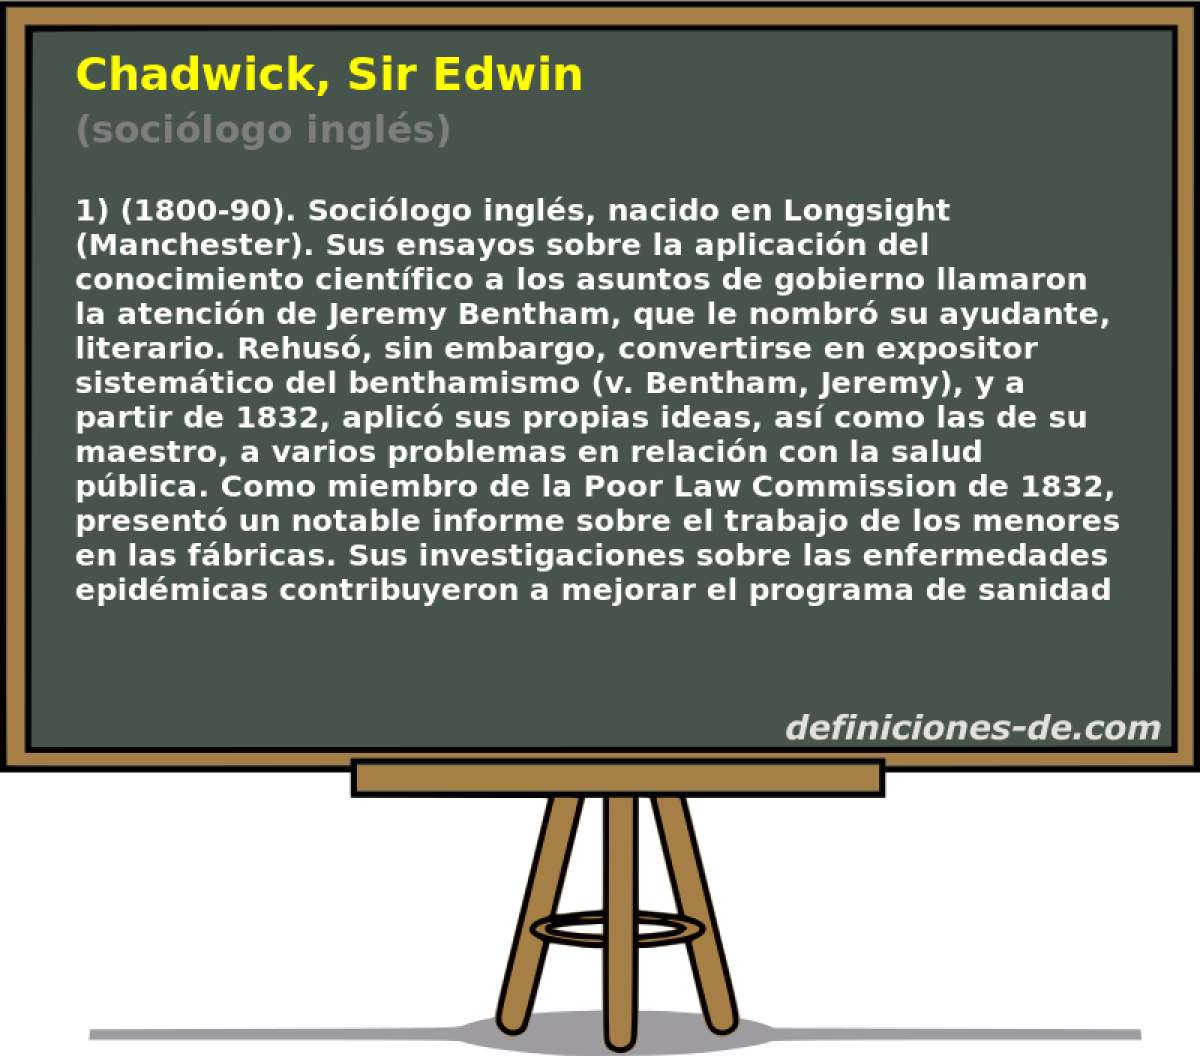 Chadwick, Sir Edwin (socilogo ingls)